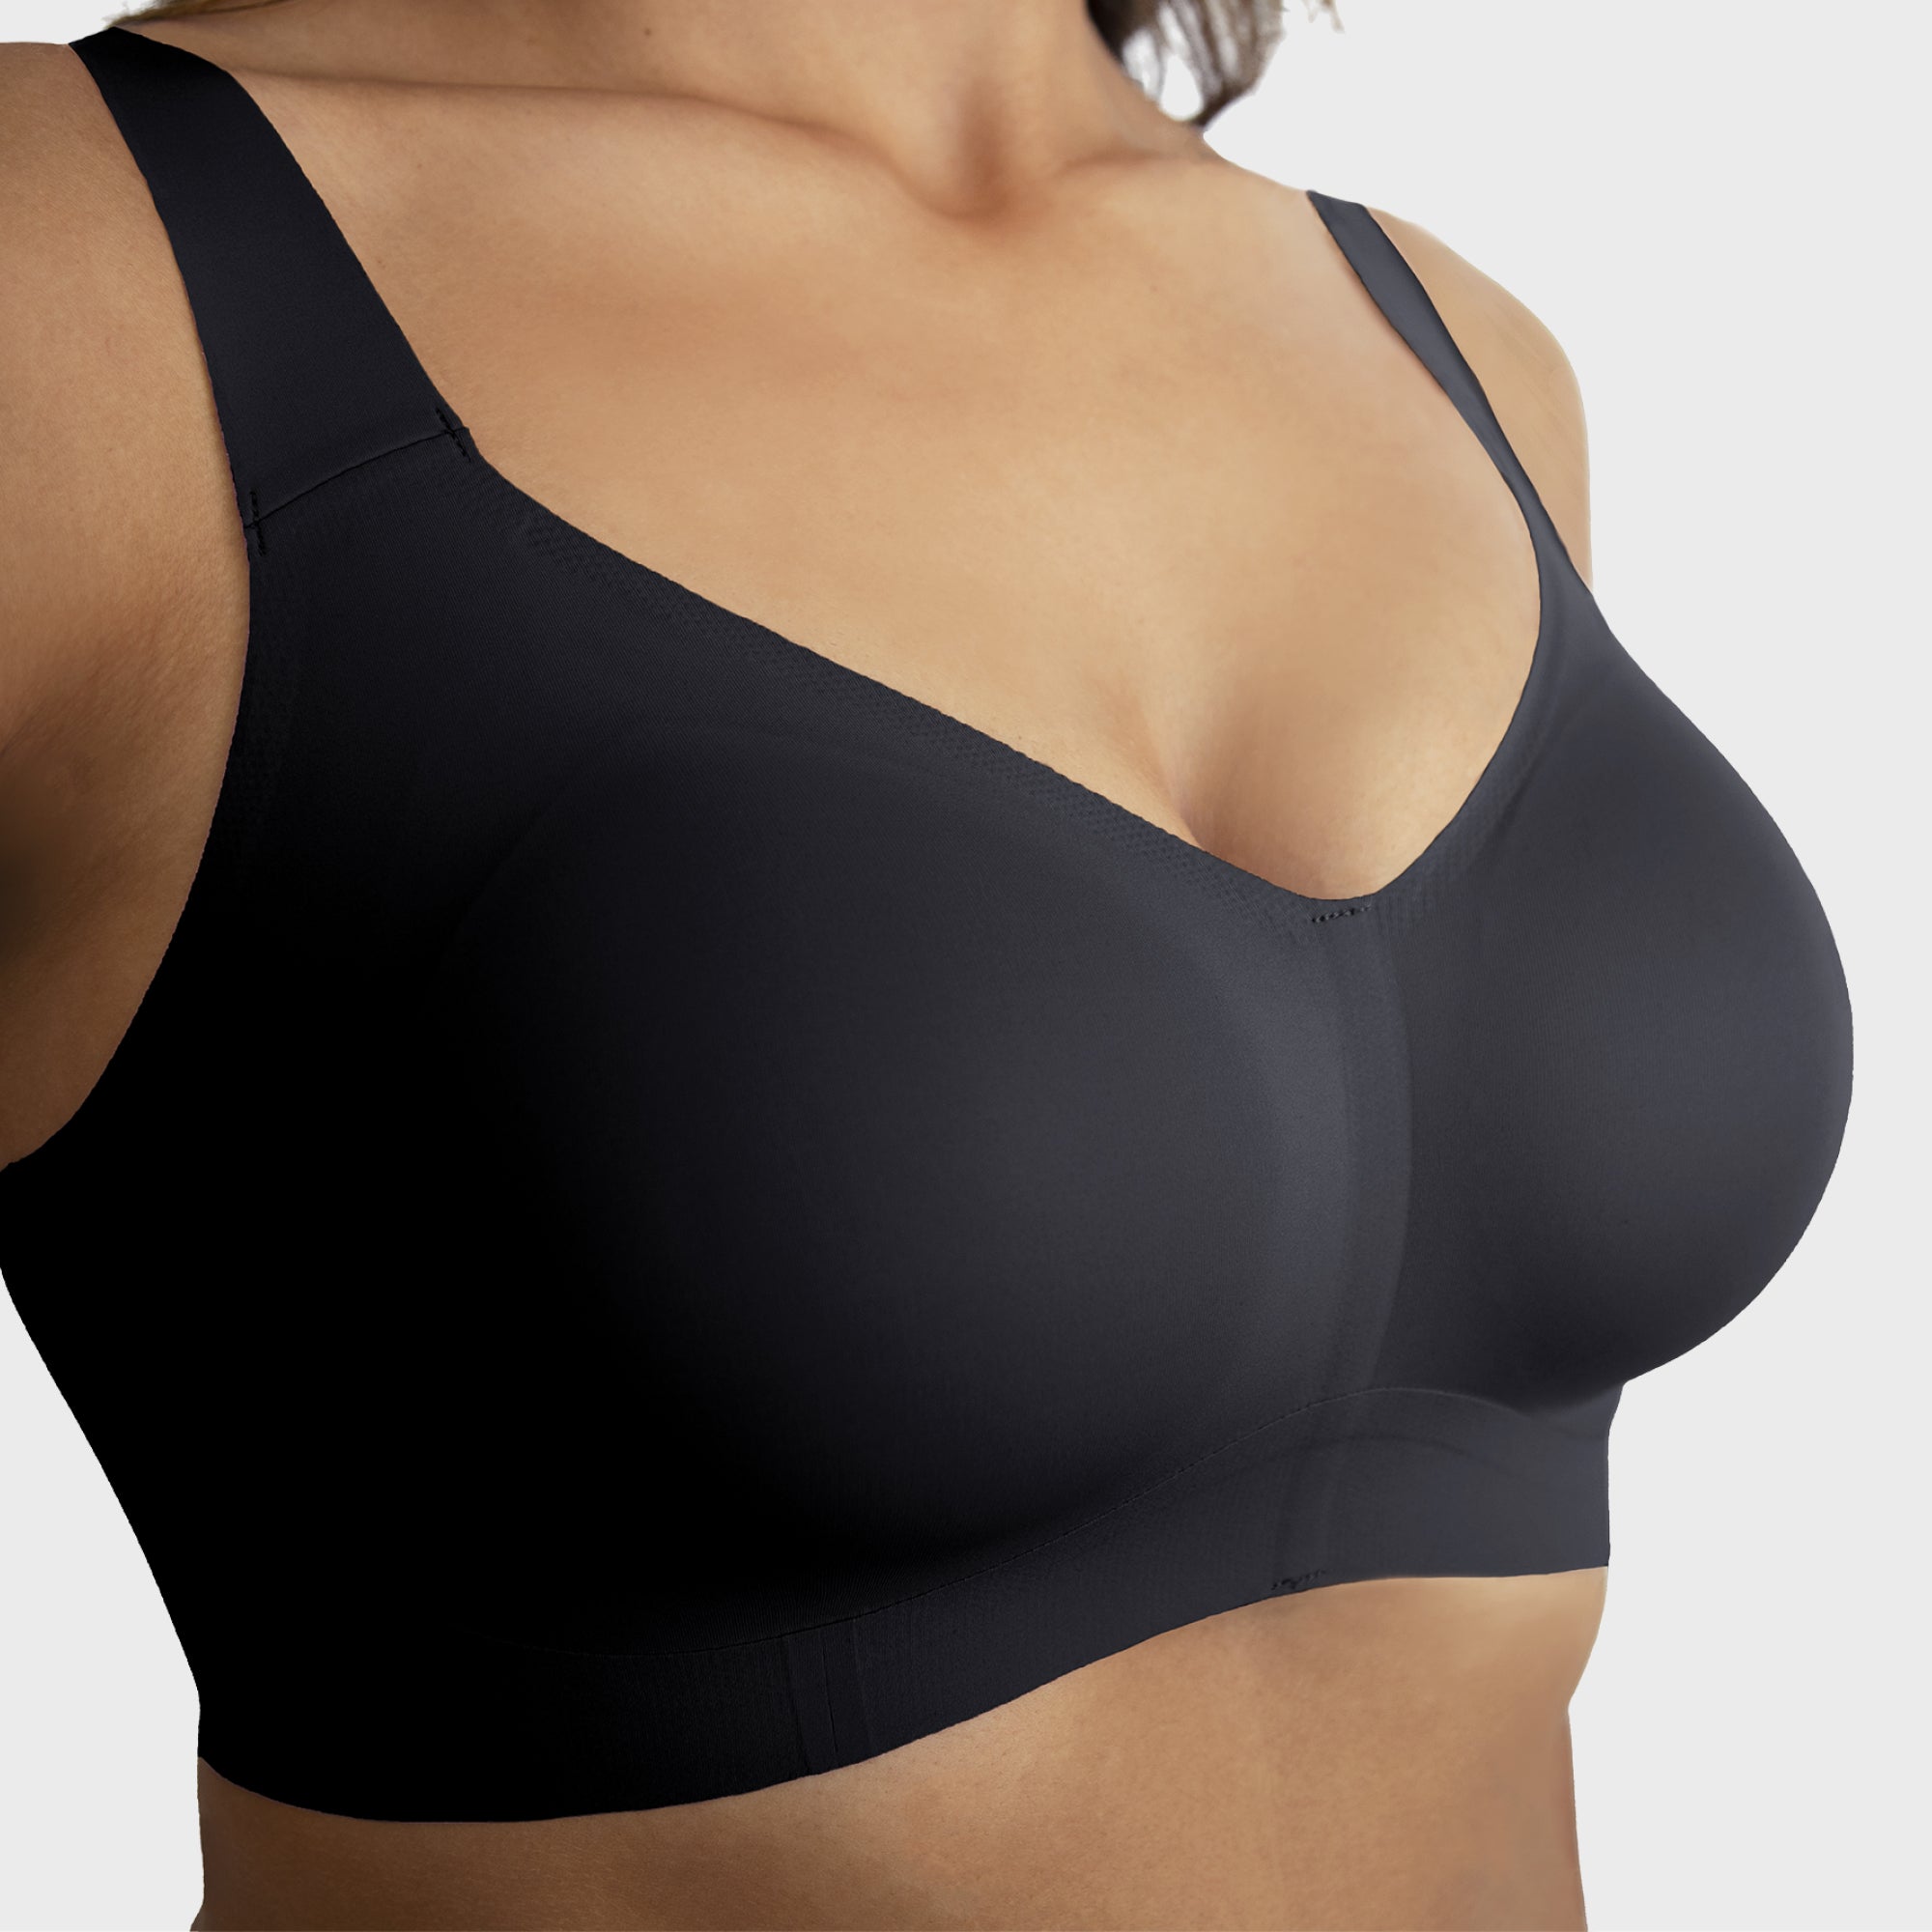 All Color: Black | Adjustable wireless bra